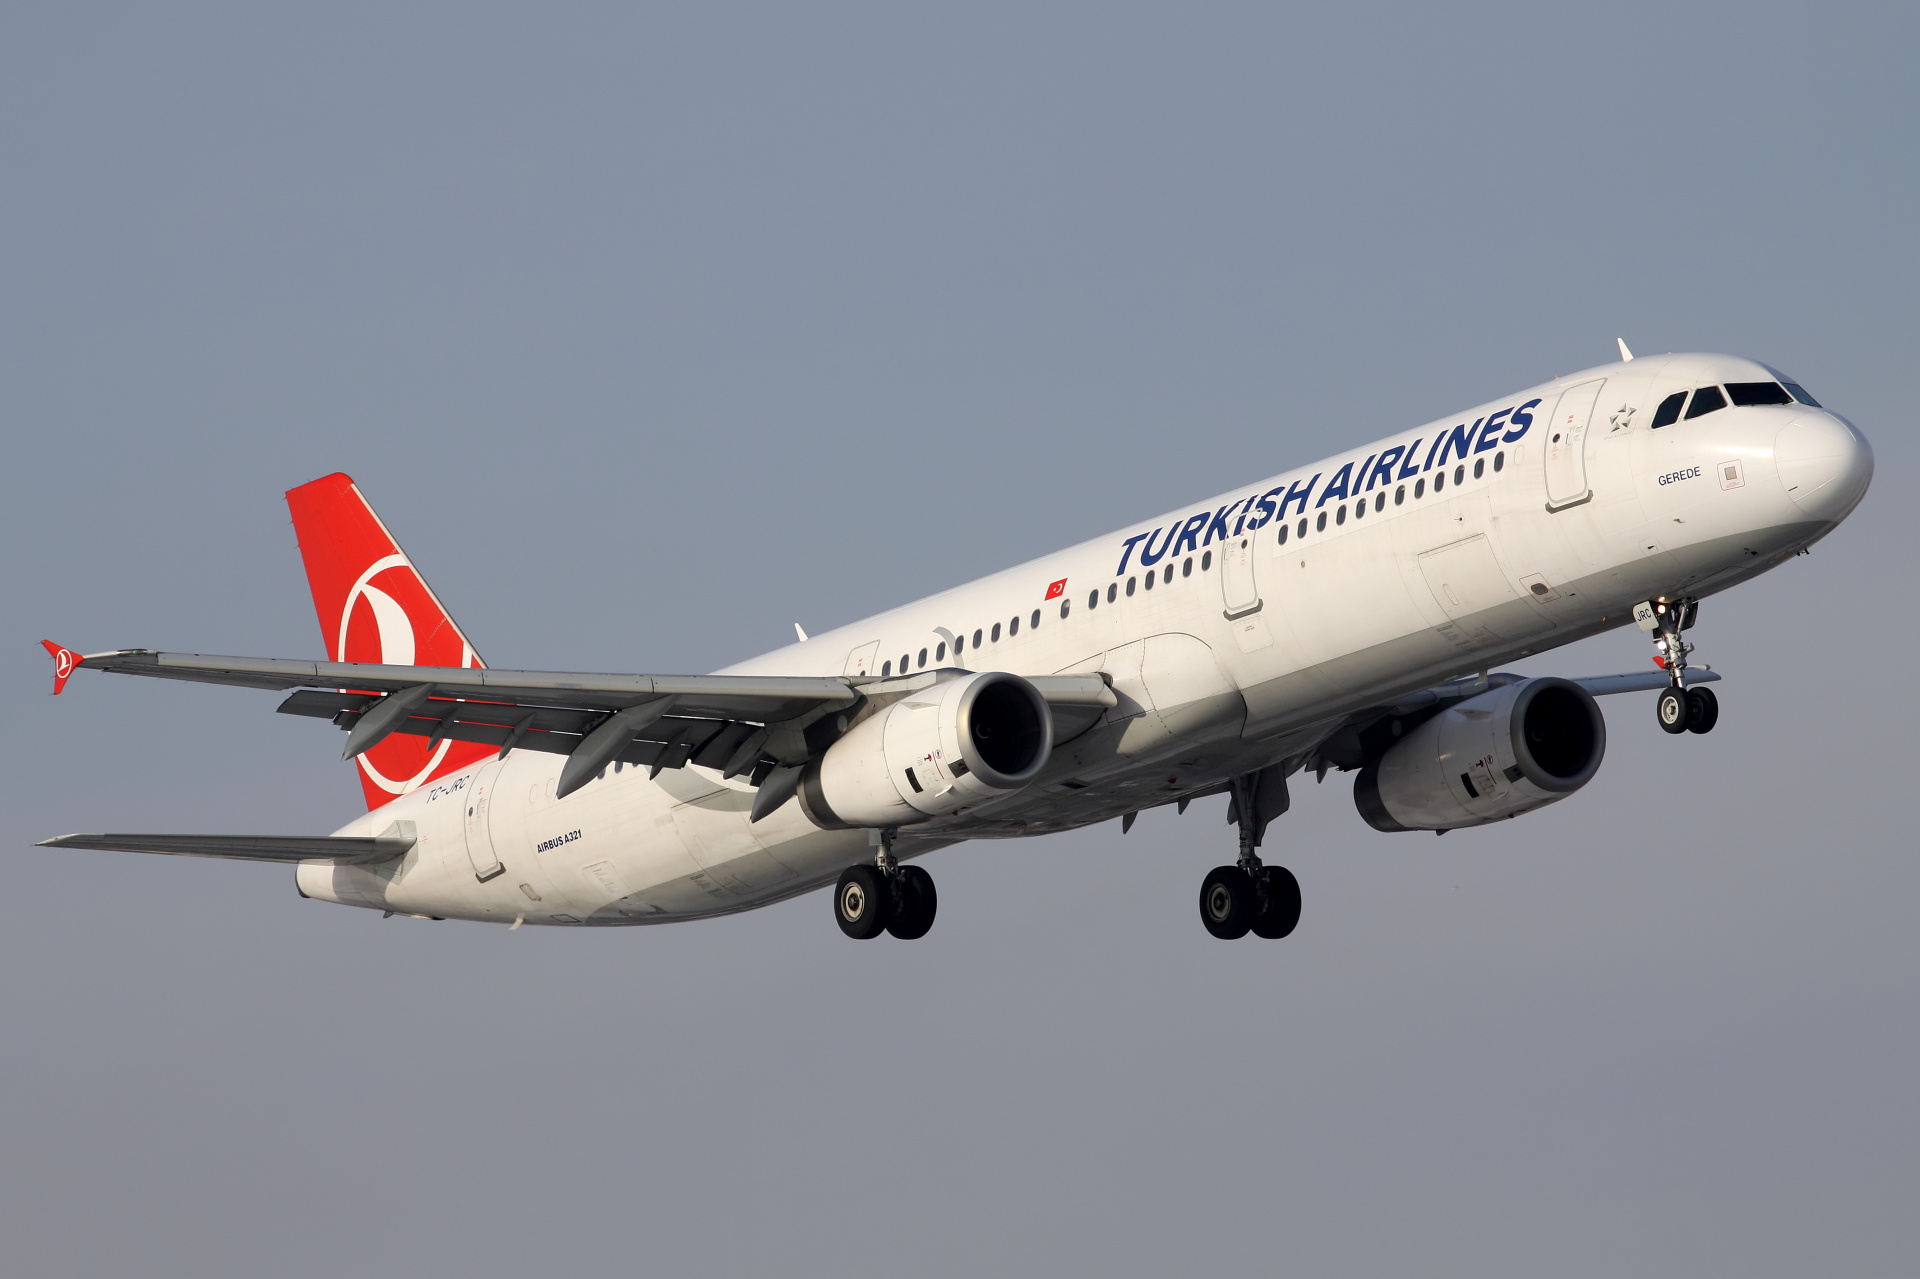 TC-JRC (Aircraft » EPWA Spotting » Airbus A321-200 » THY Turkish Airlines)